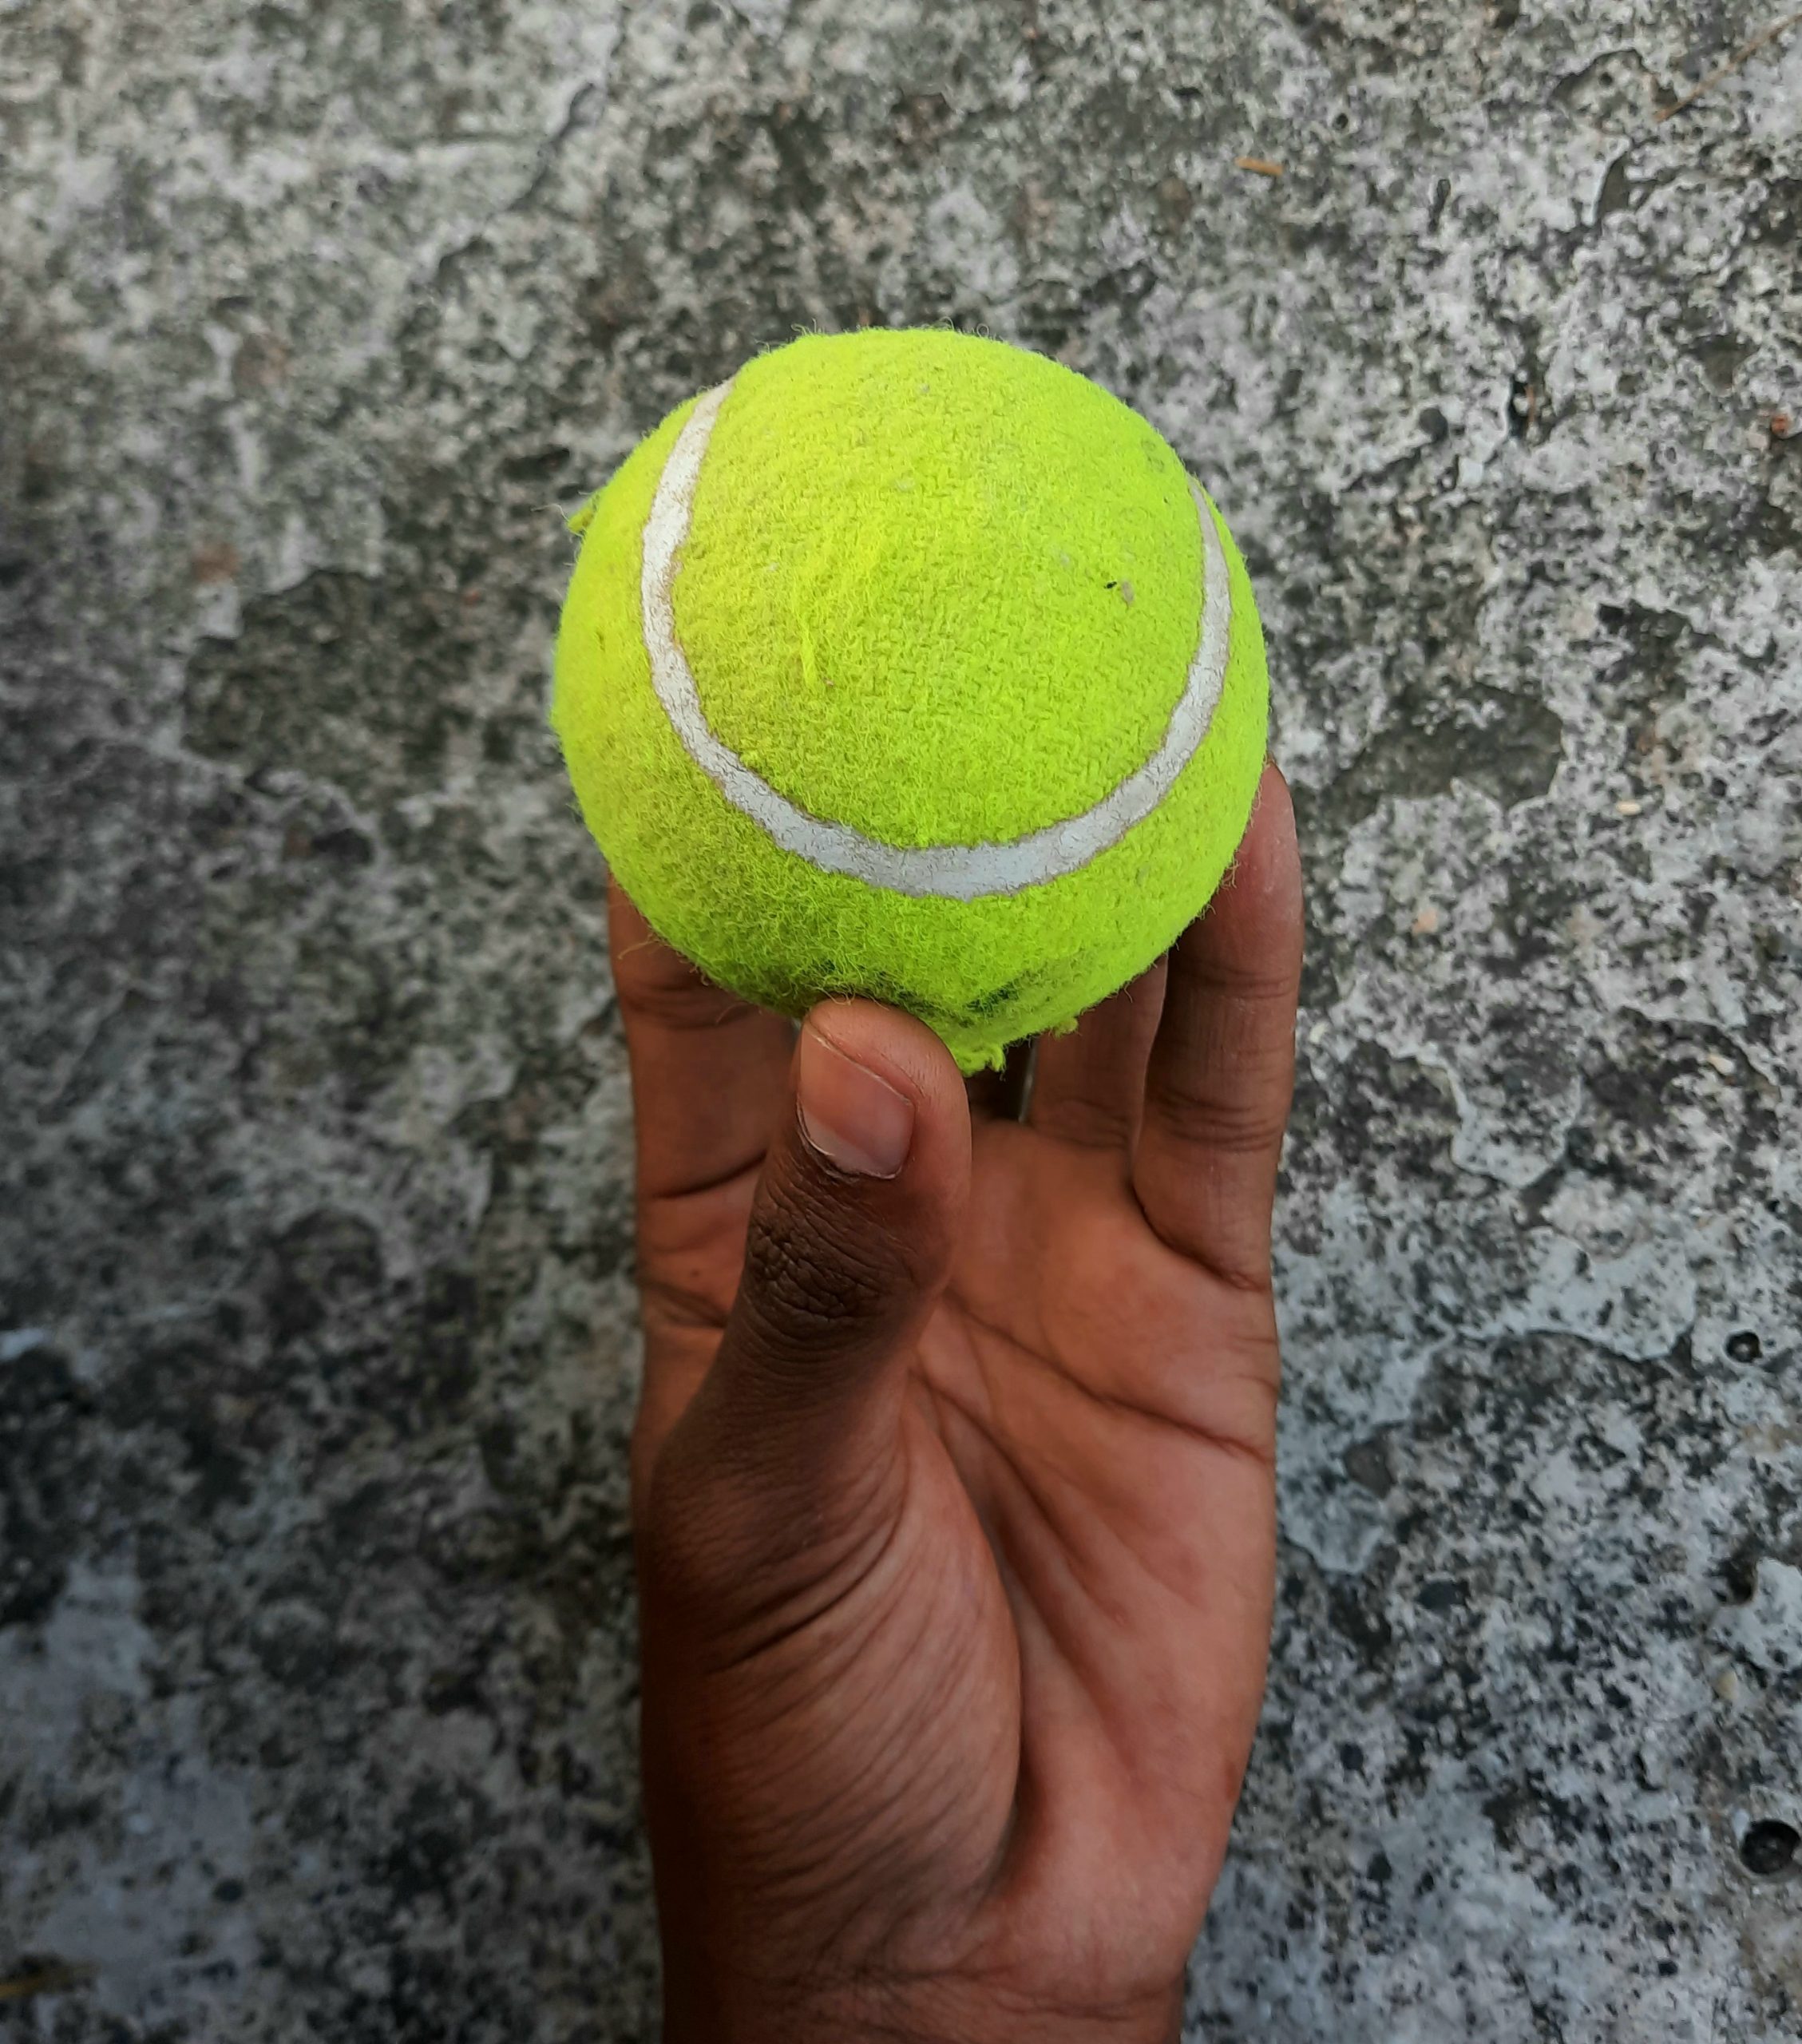 tennis ball in hand